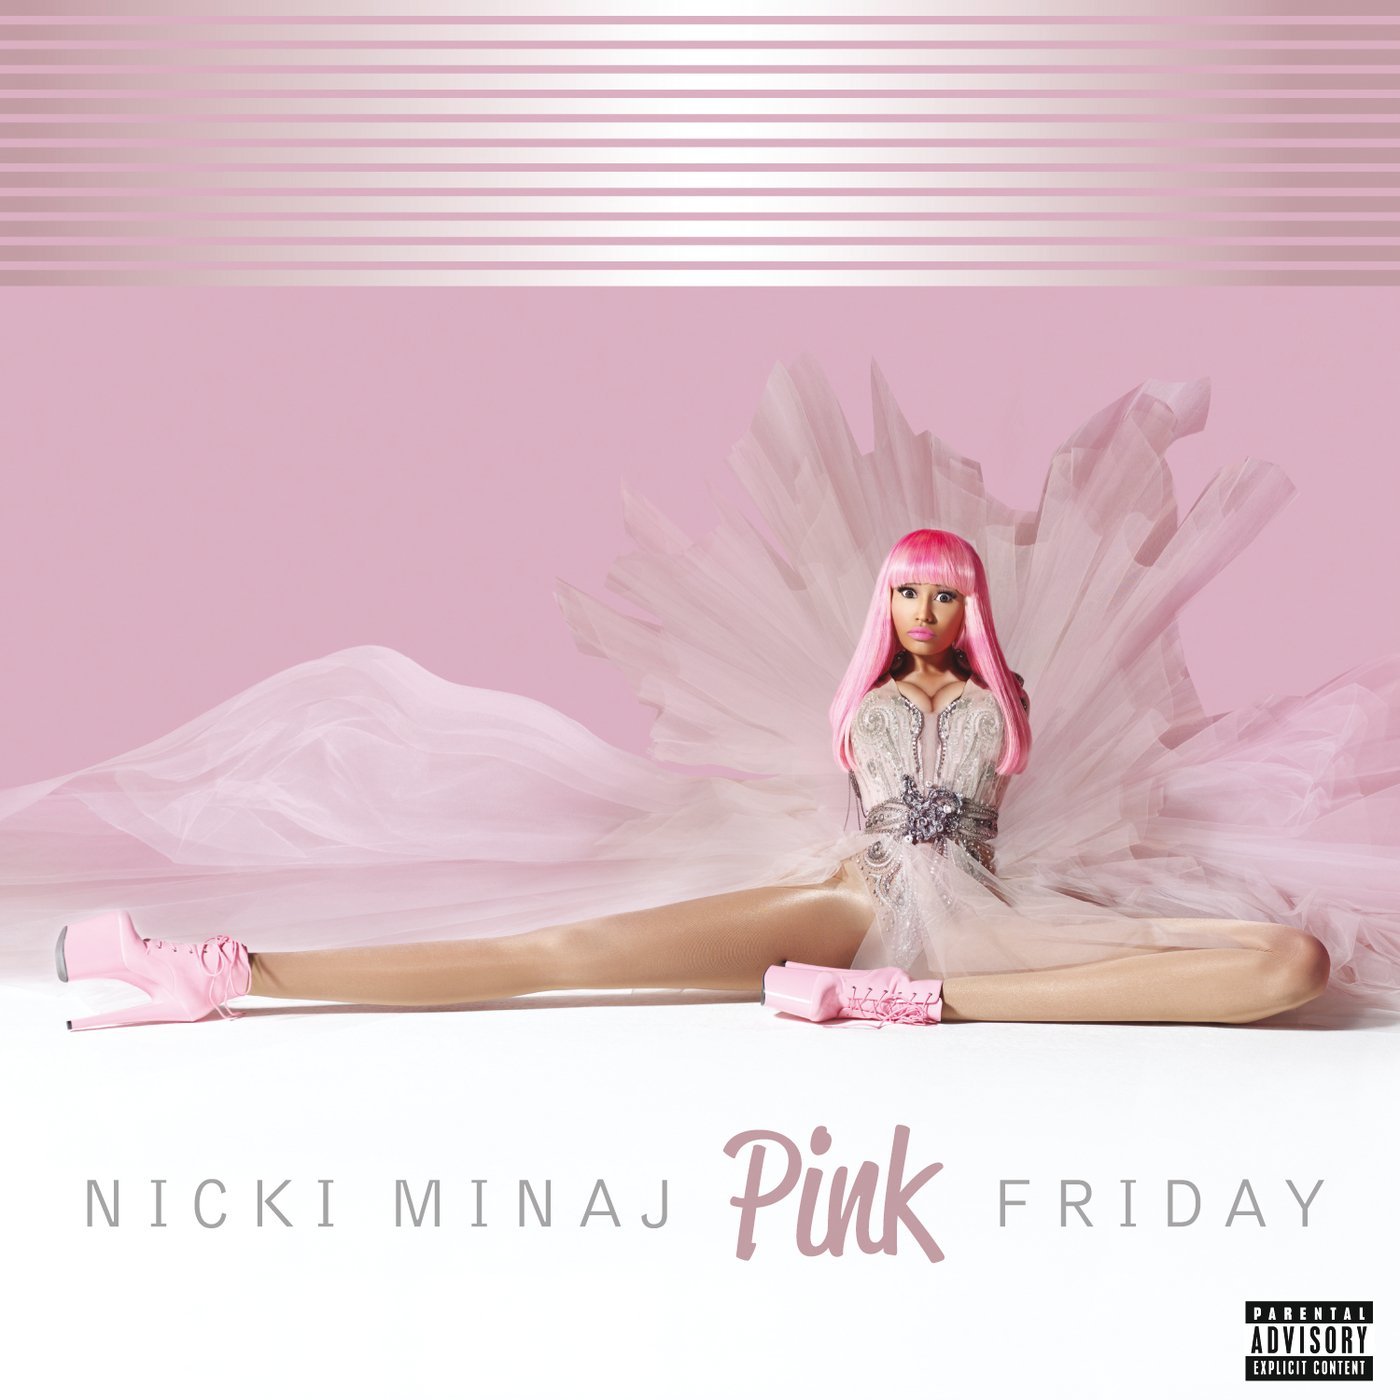 The cover for Nicki Minaj's 'Pink Friday' album, released November 19, 2010